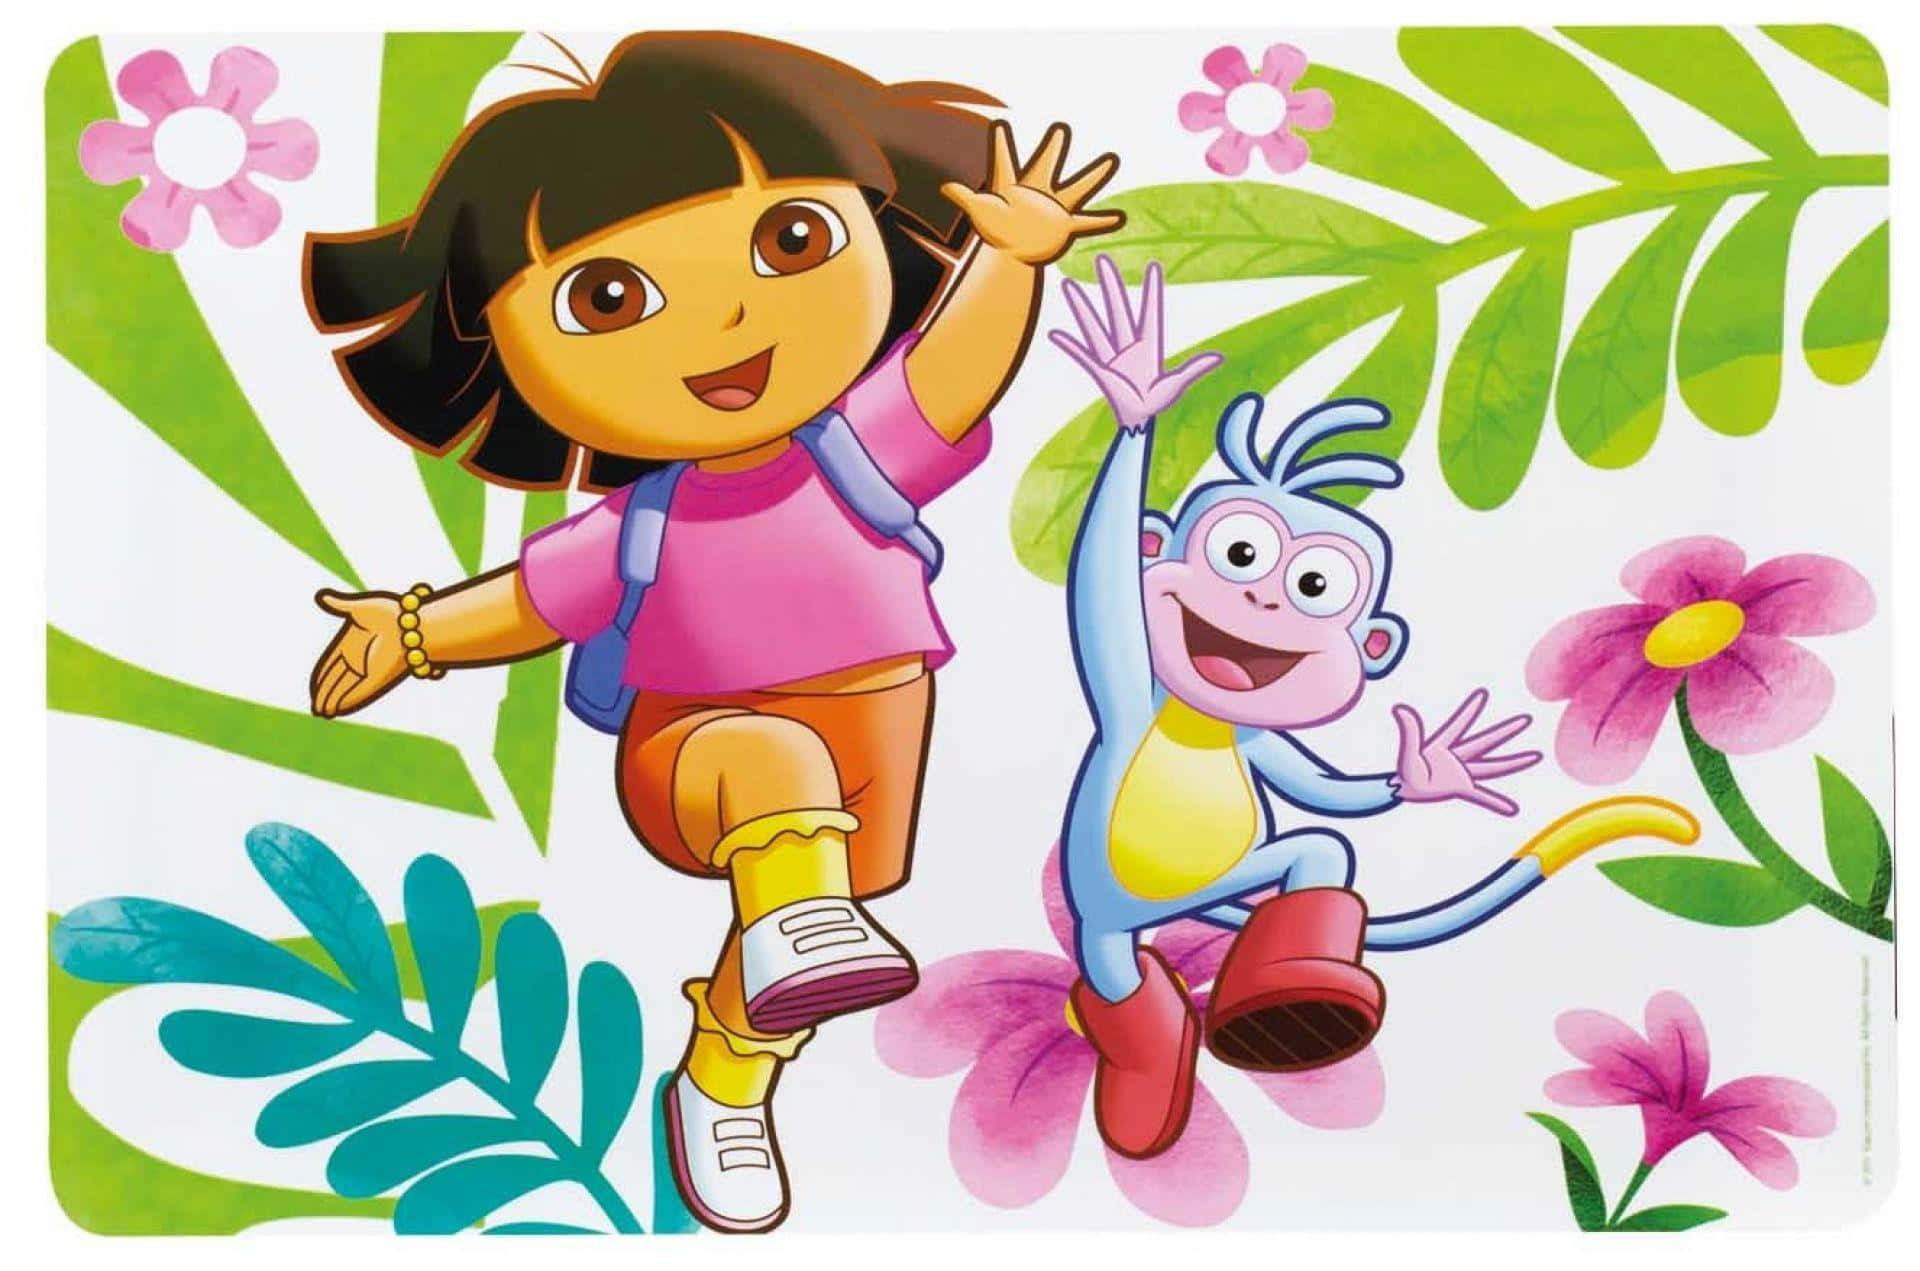 Explore with Dora!